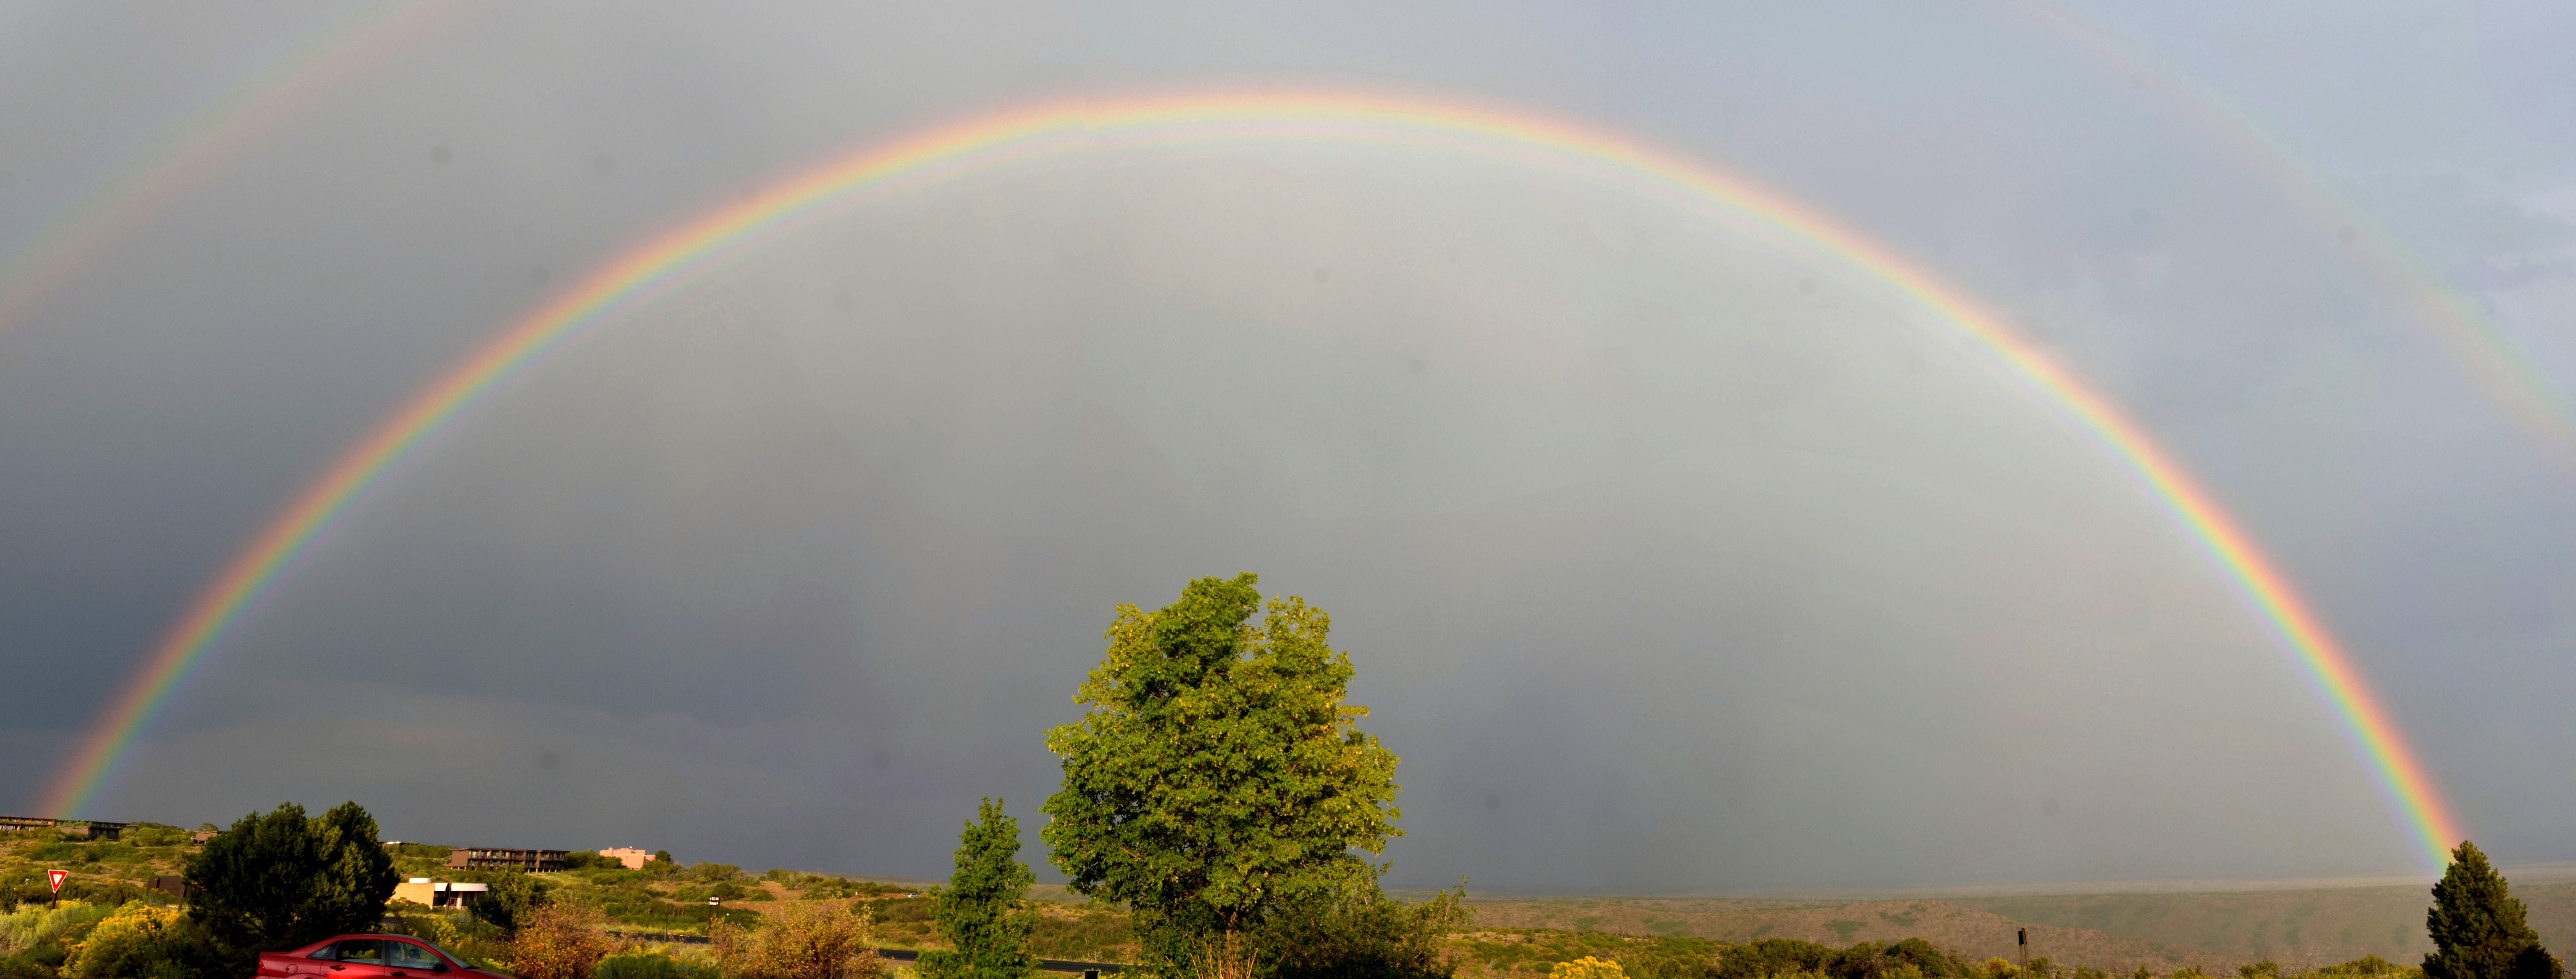 File:Double rainbow, Far View Terrace, Mesa Verde National Park.jpg ...